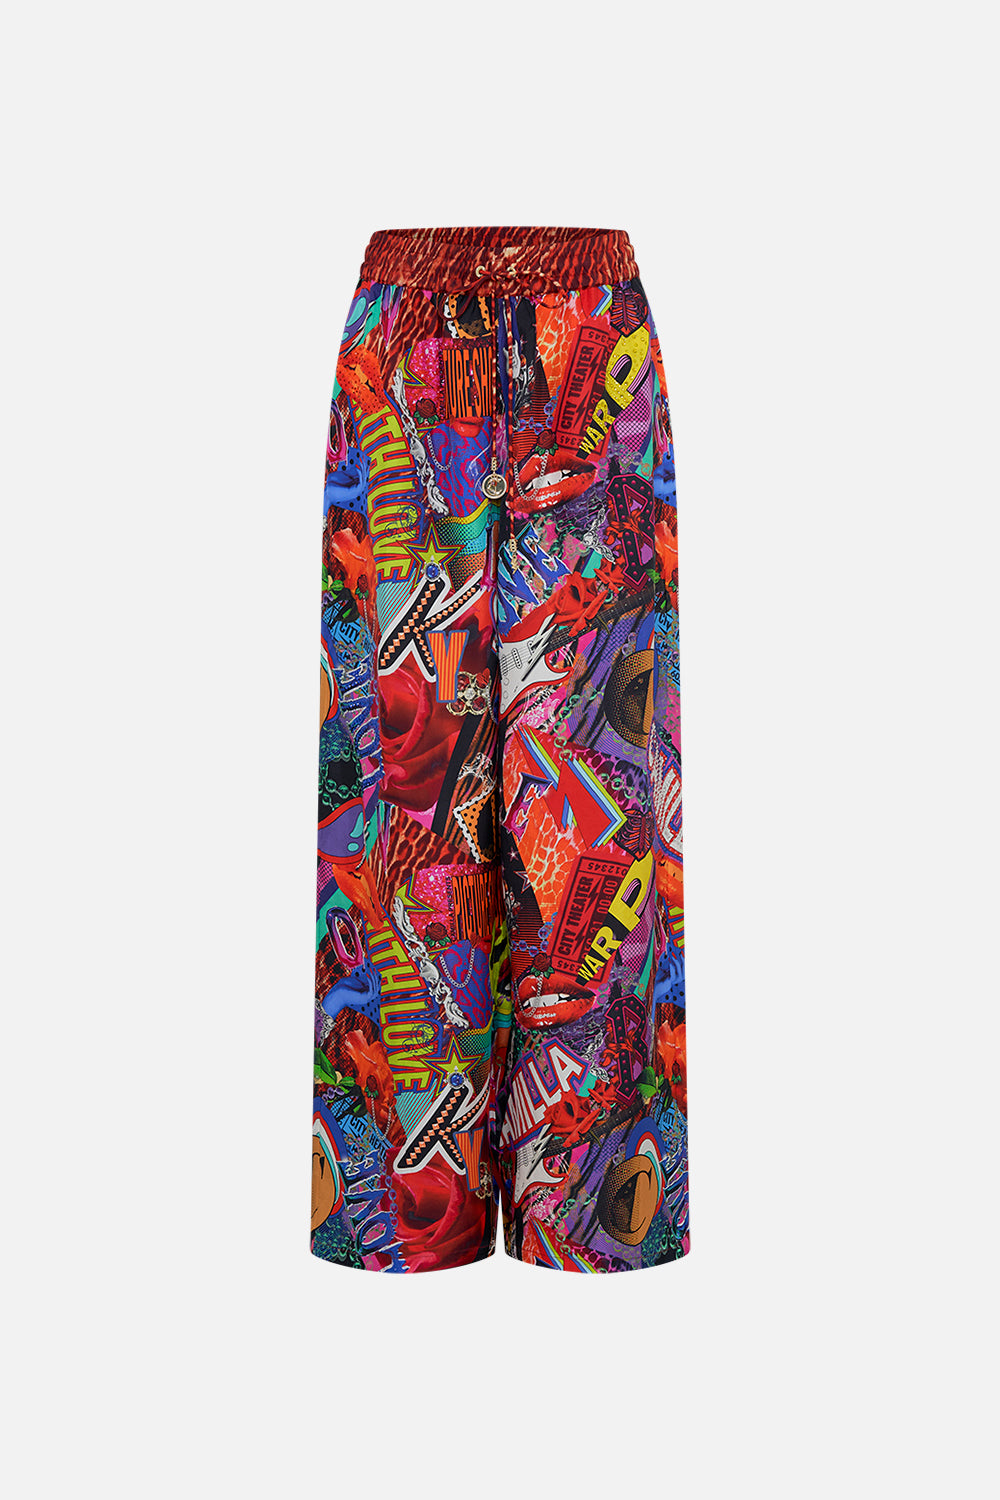 Product view of CAMILLA silk palazzo pants in multicoloured Radical Rebirth print